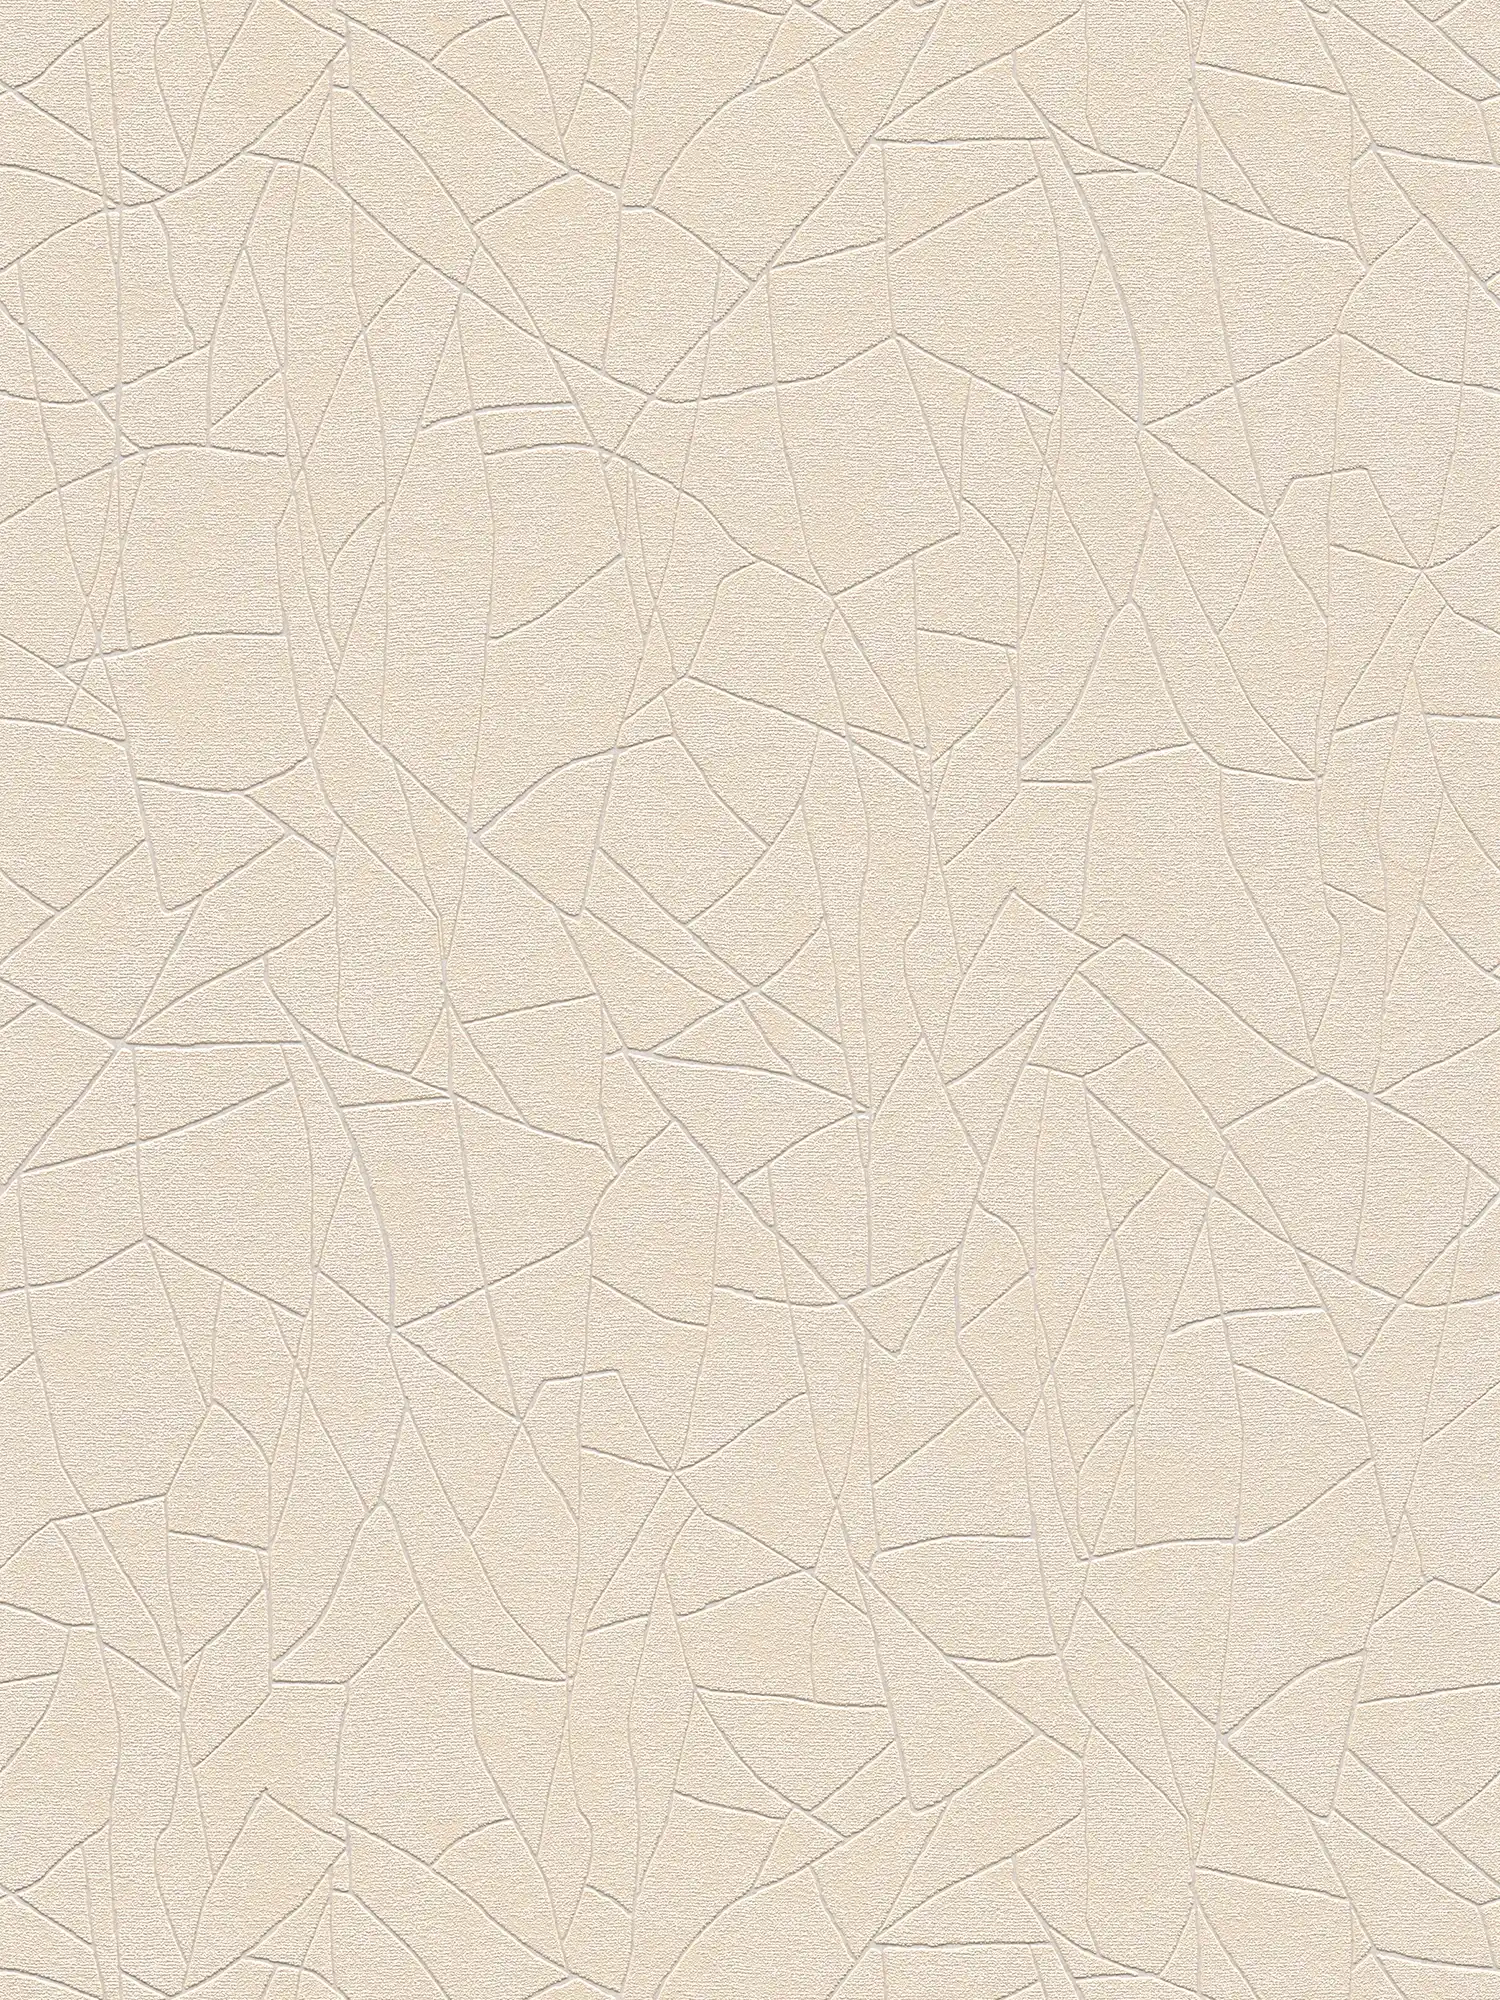         Papel pintado no tejido con motivo gráfico 3D naturaleza - beige, crema, blanco
    